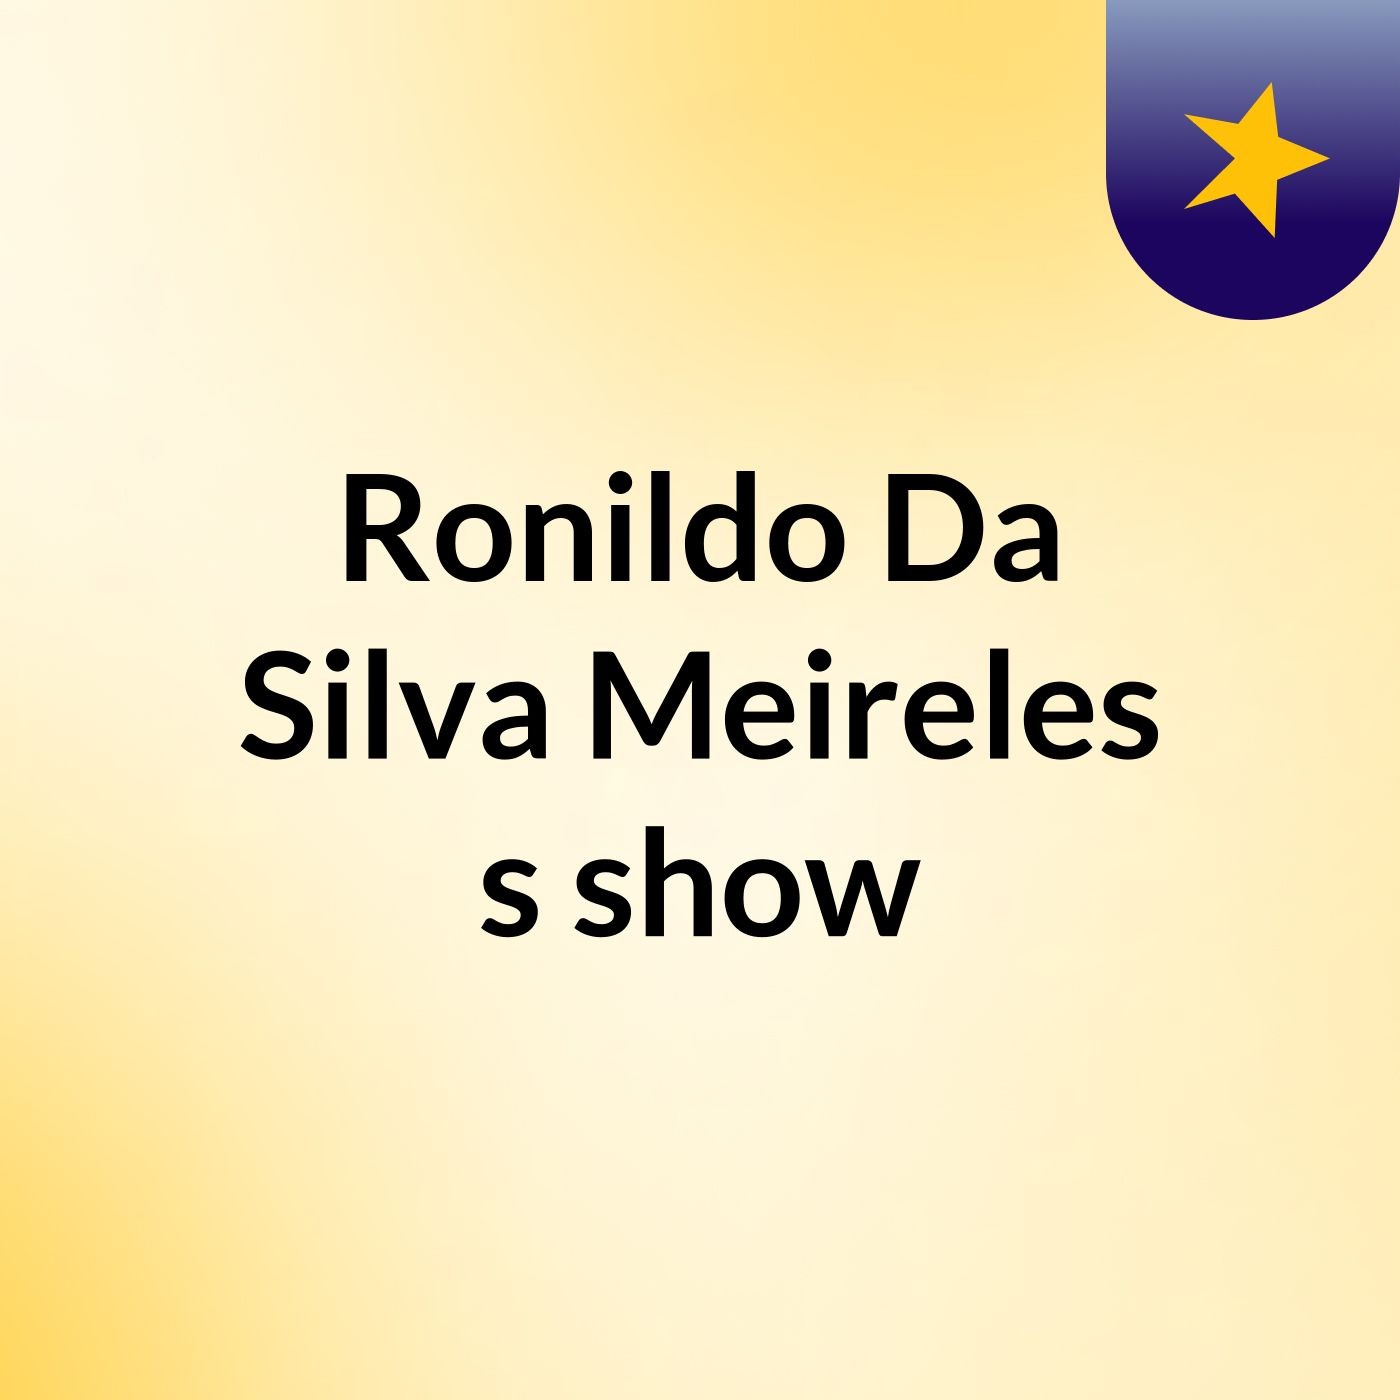 Ronildo Da Silva Meireles's show